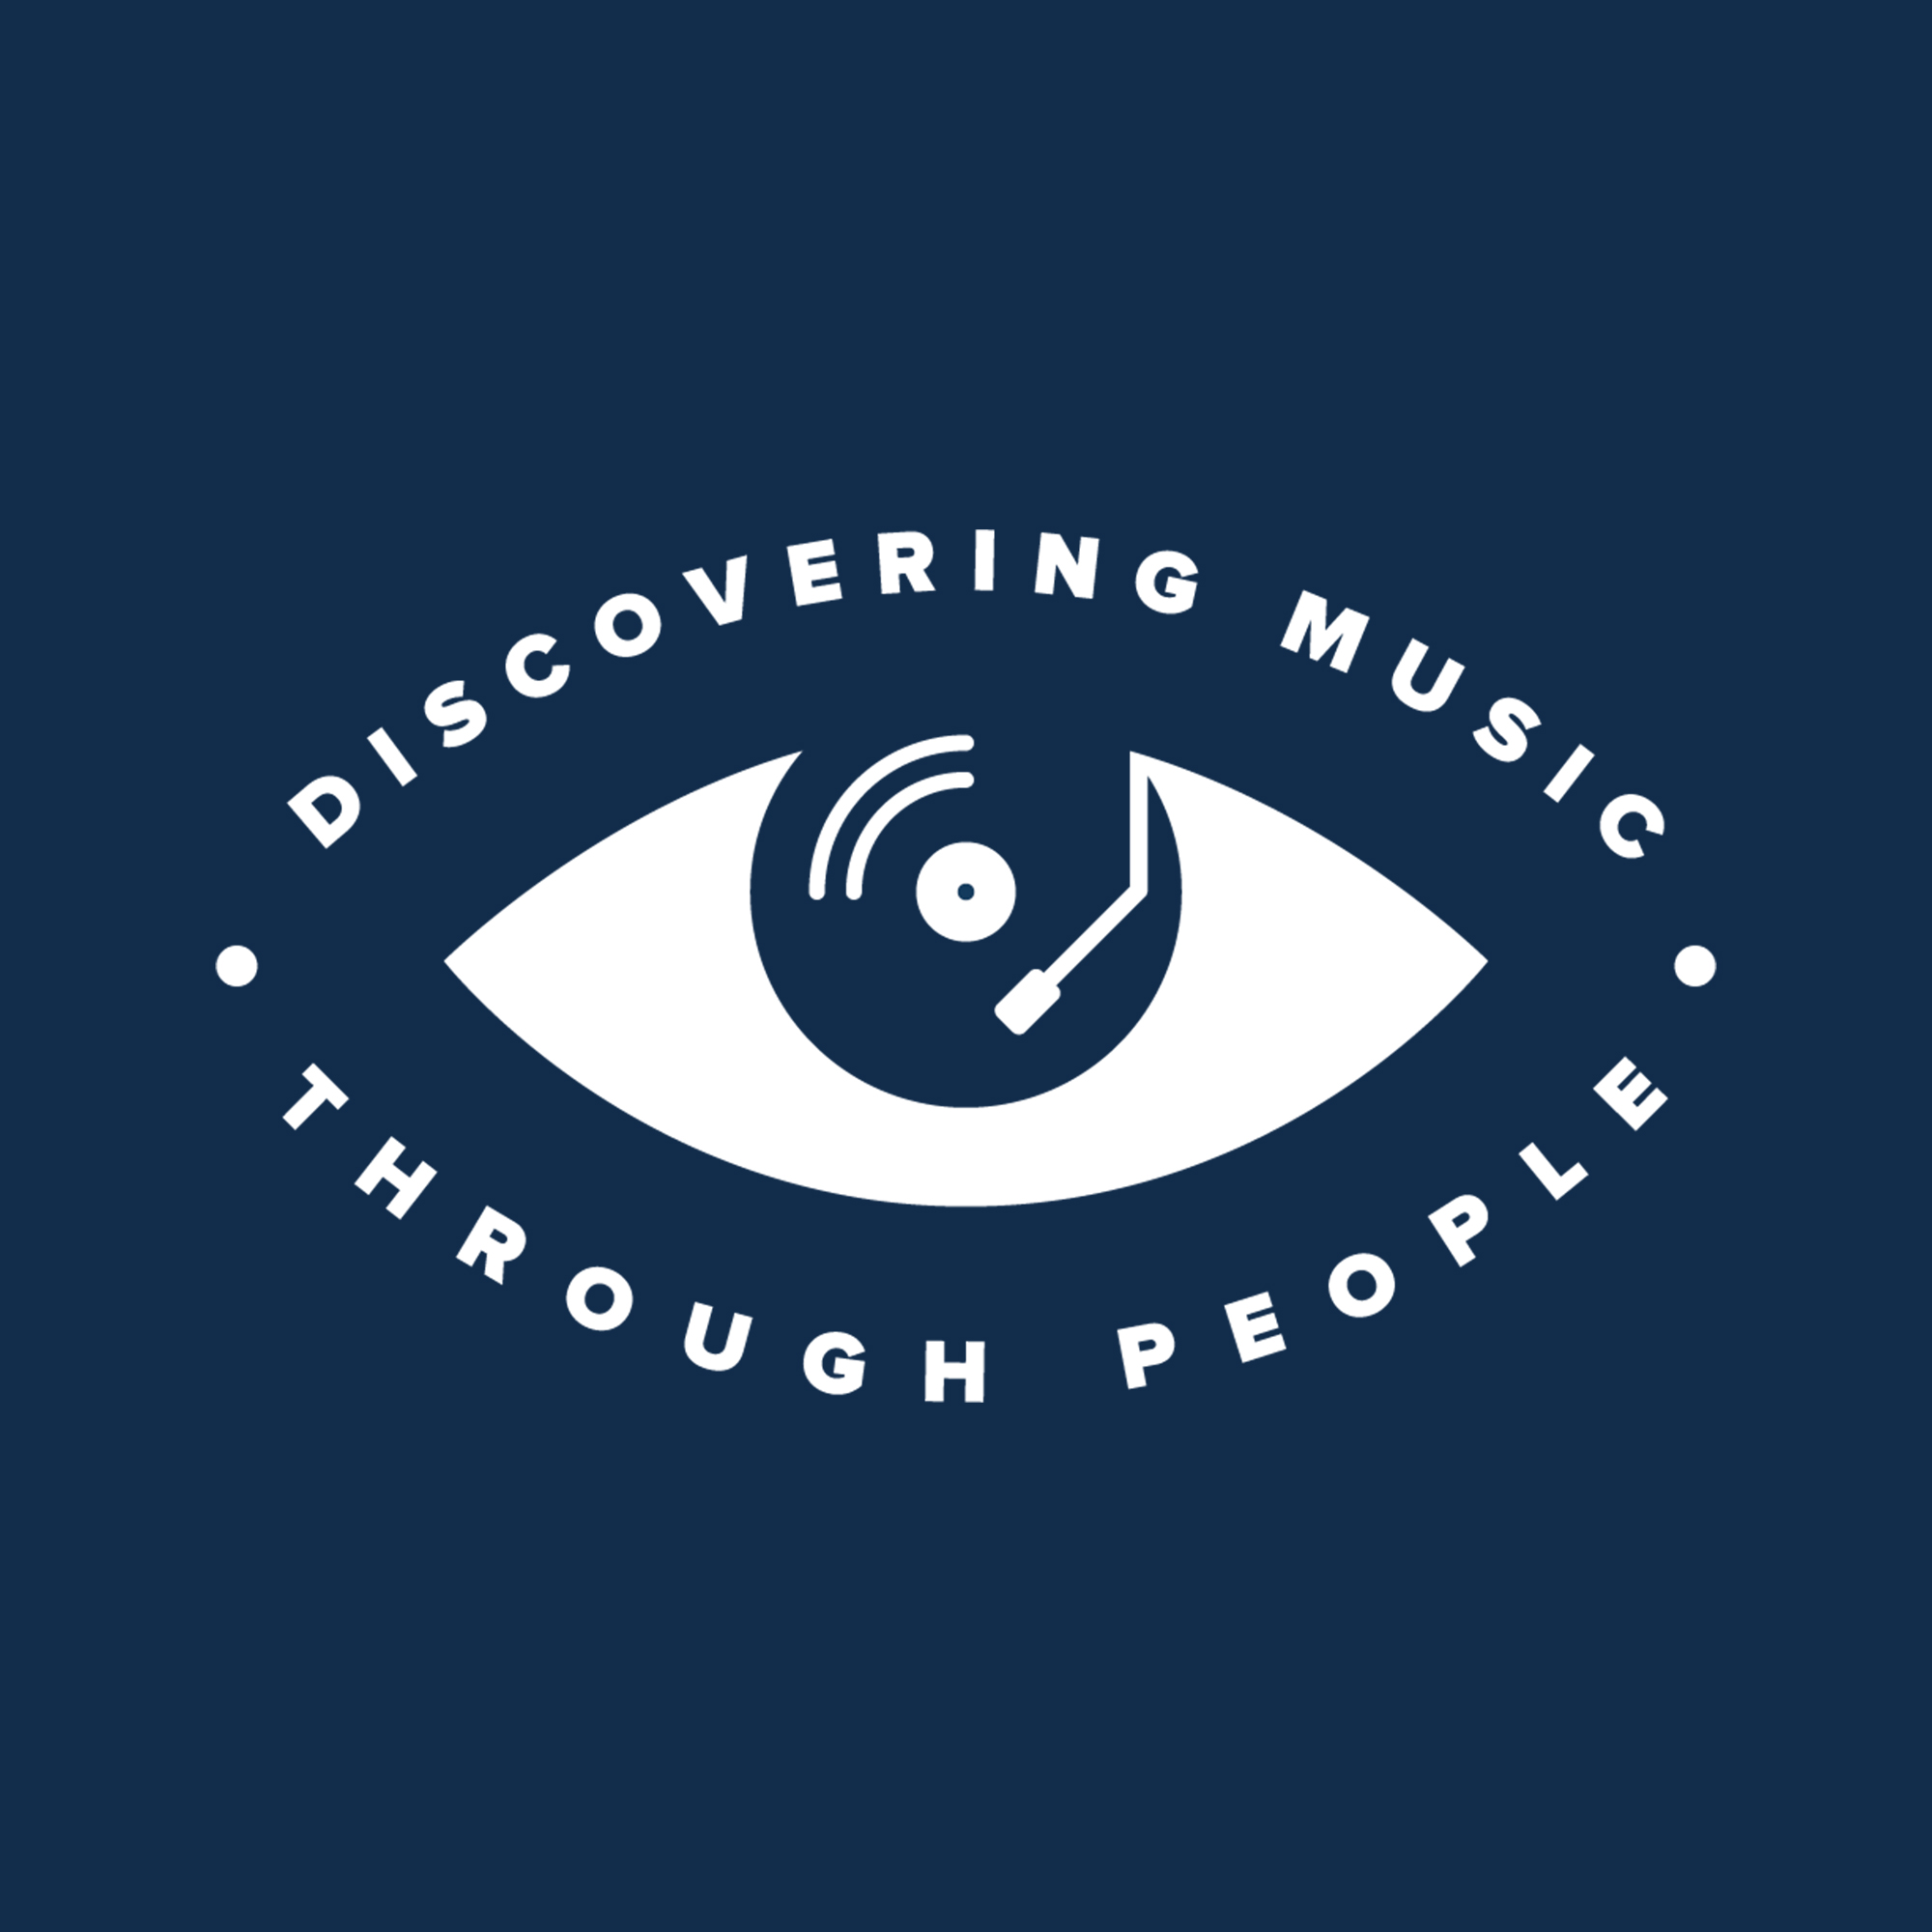 8tracks Discovering Music Through People badge branding identity design by Maximillian Piras